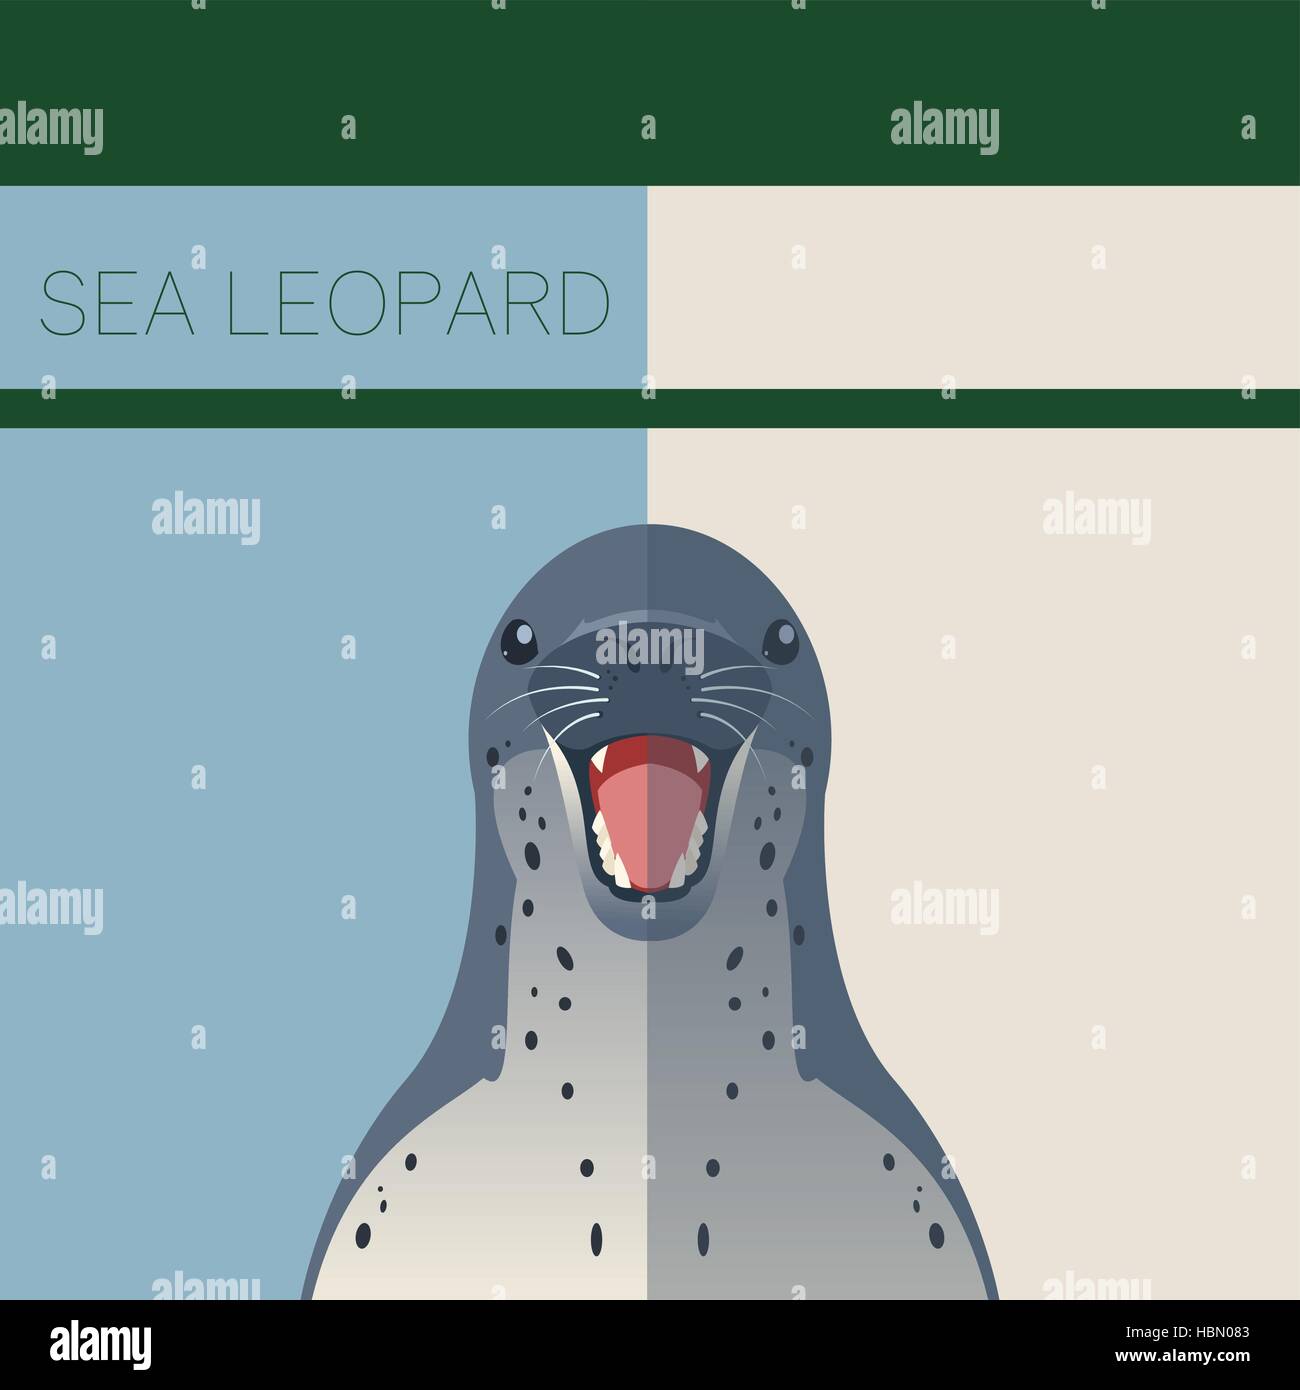 Vektor-Bild der Sea Leopard flache Postkarte Stock Vektor